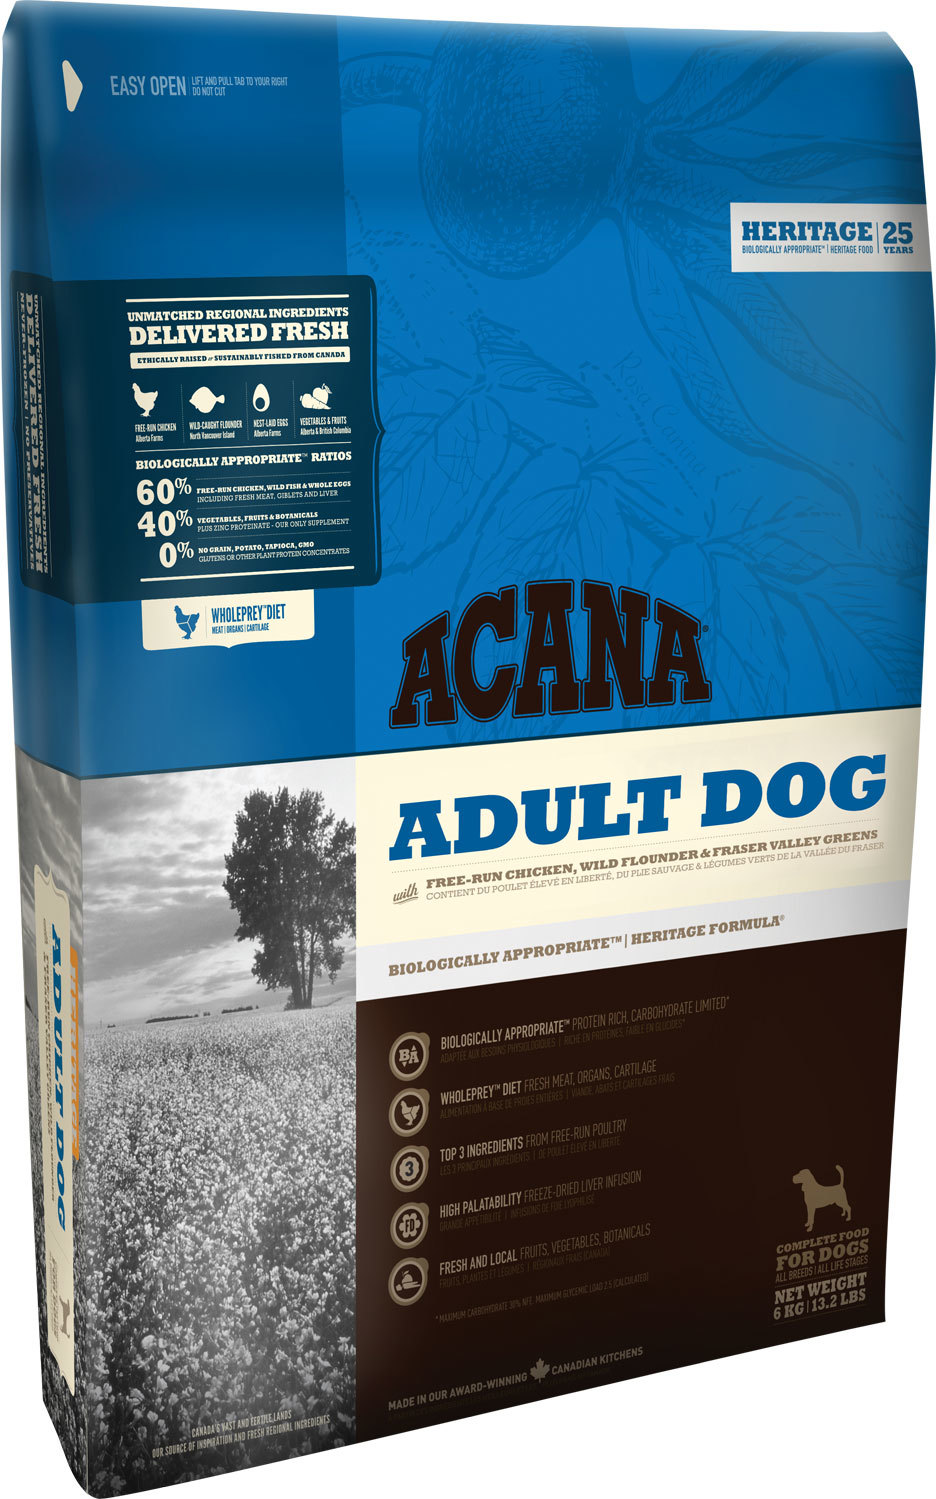 Acana Adult Dog - zoom